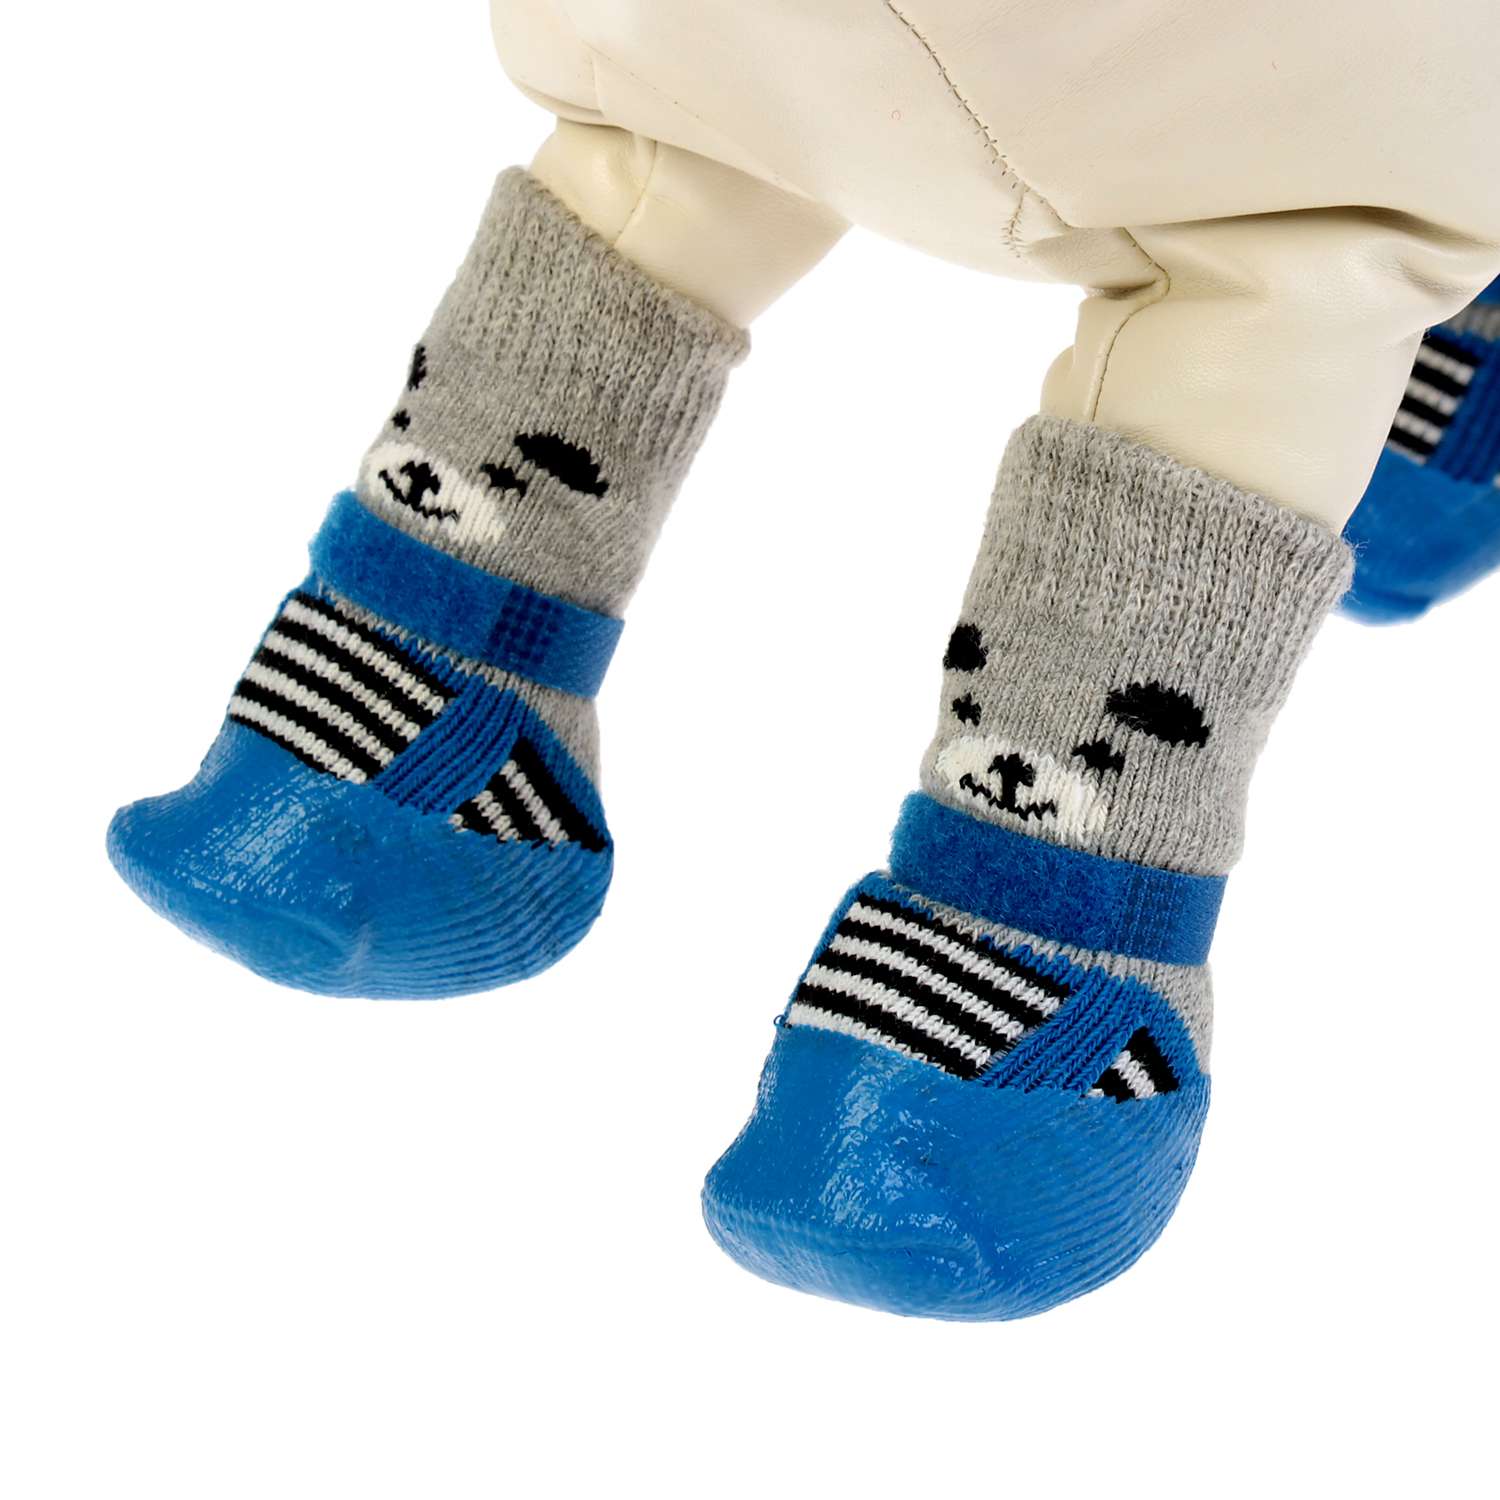 Носки Пижон «Мишки» с прорезиненной подошвой размер L 5 х 6.5 см синие - фото 3